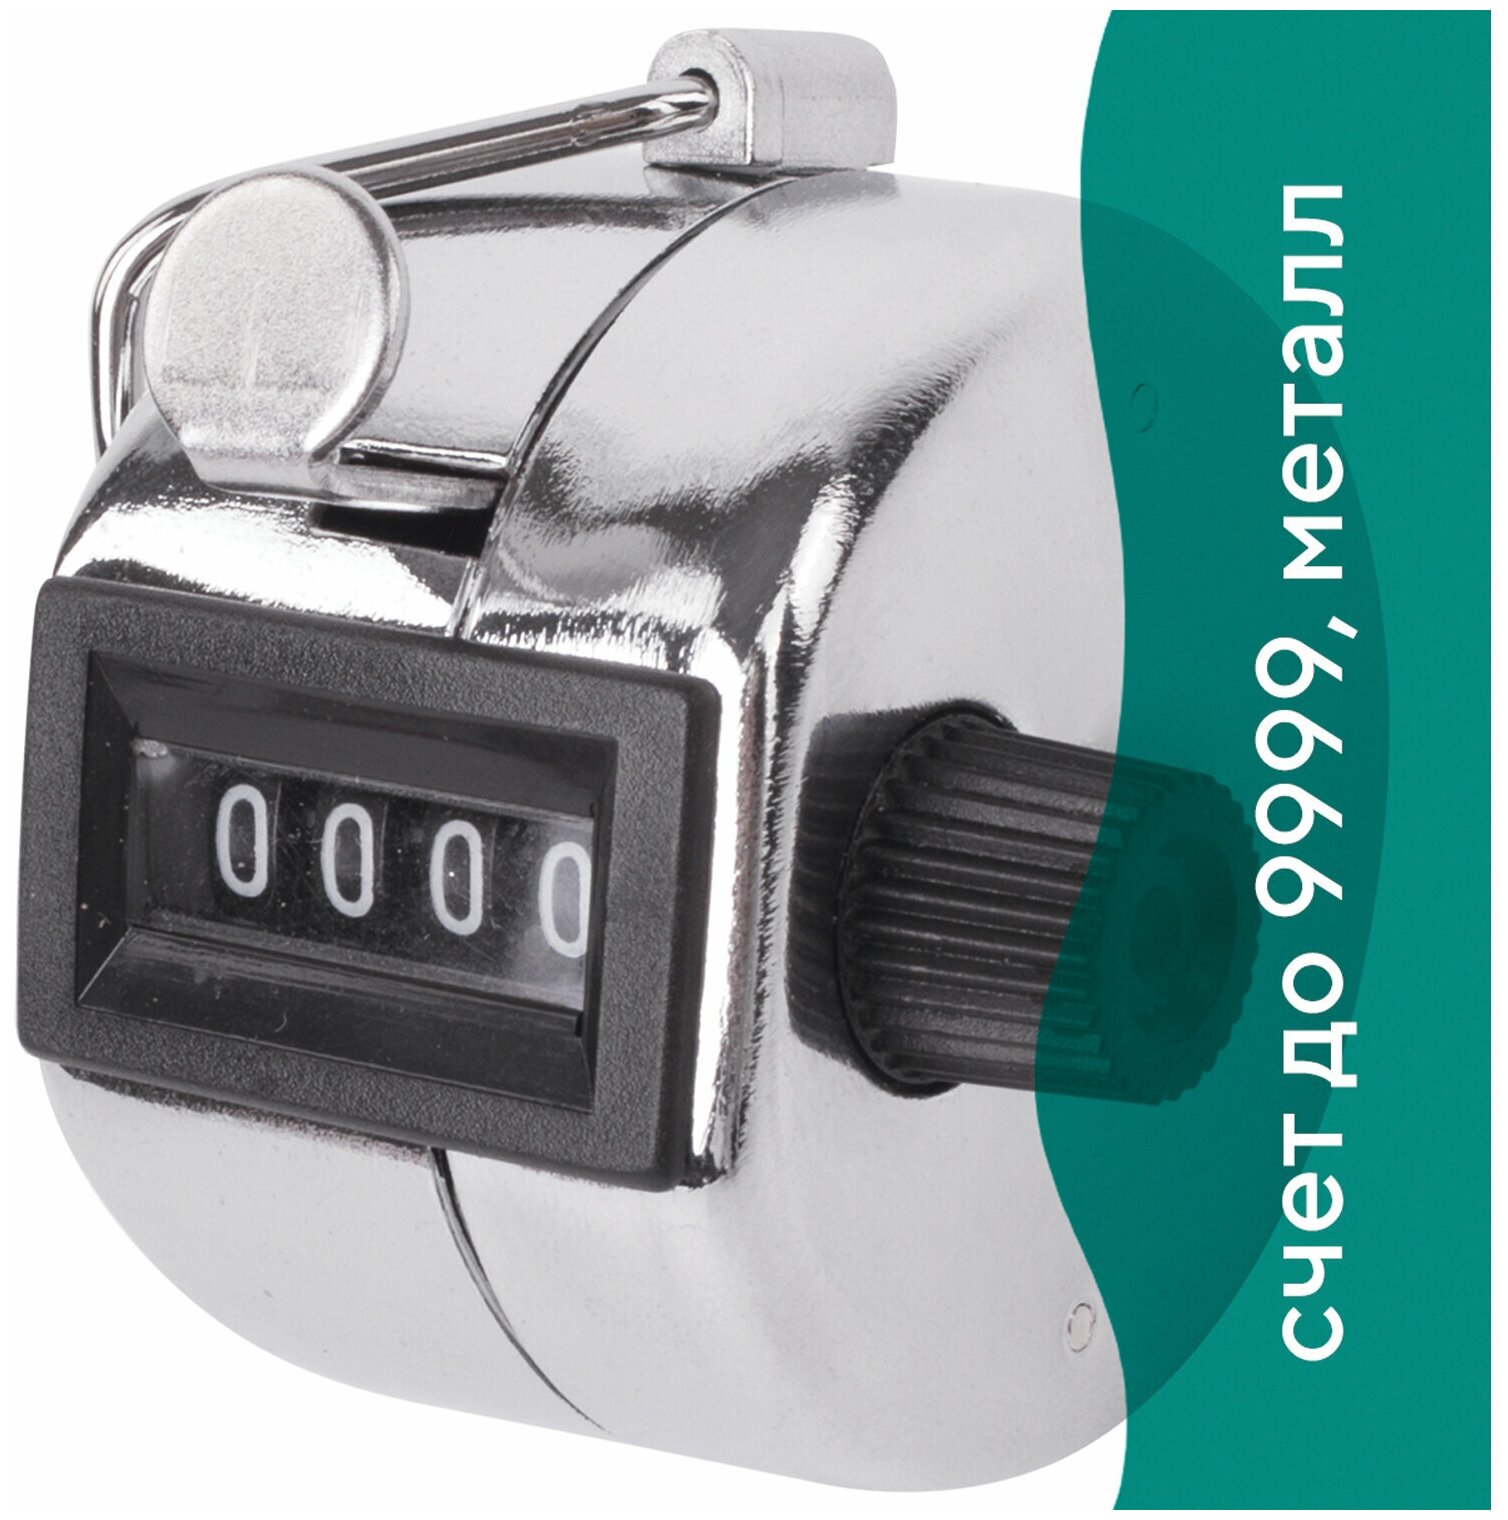 Счетчик механический (кликер), счет от 0 до 9999, корпус металлический, хром, BRAUBERG, 453995 2 шт .